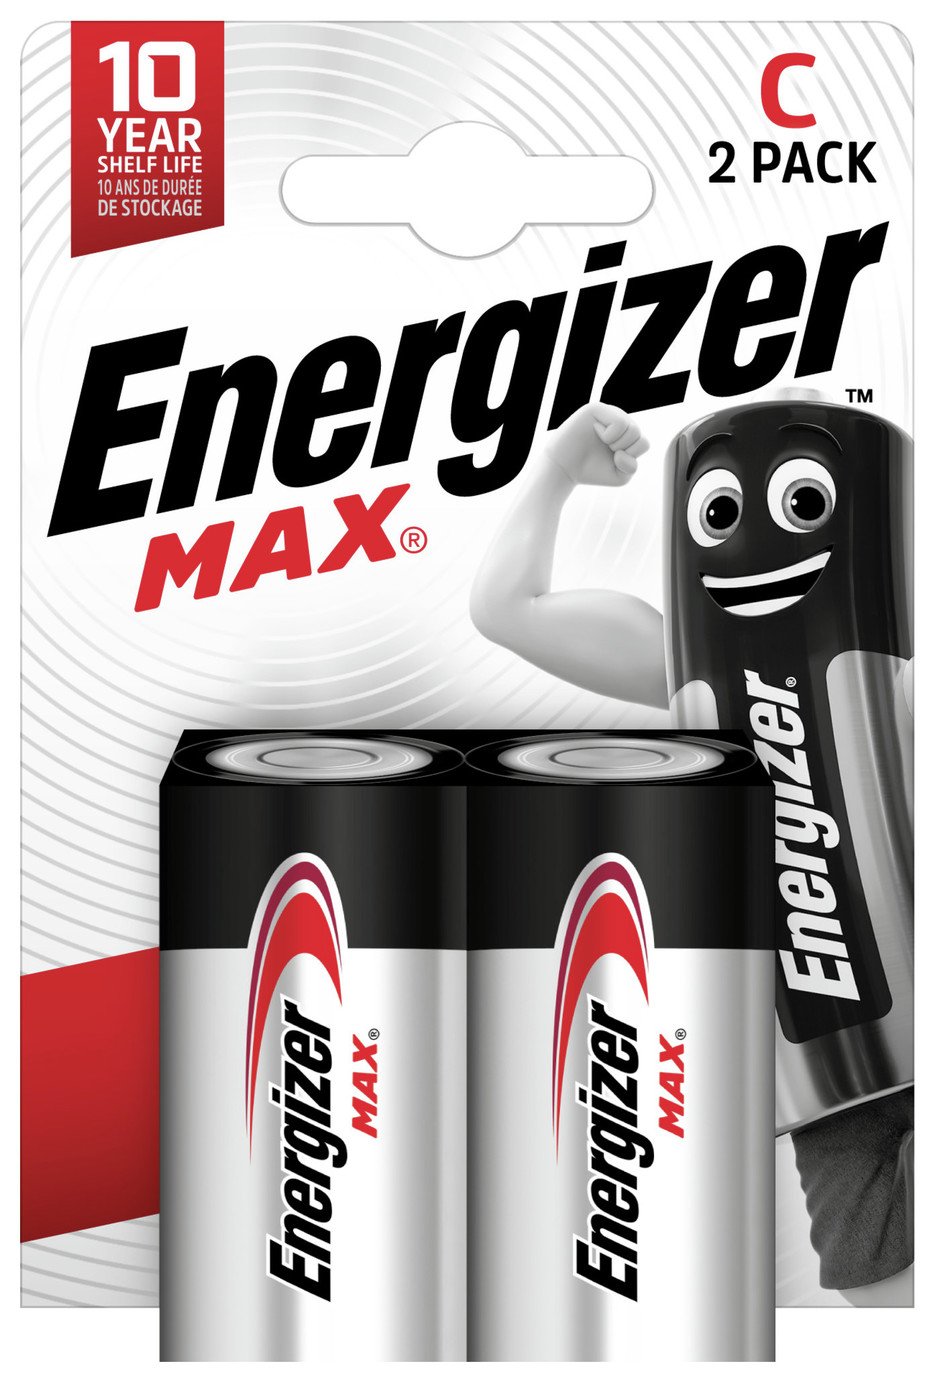 Energizer Max C Batteries Review